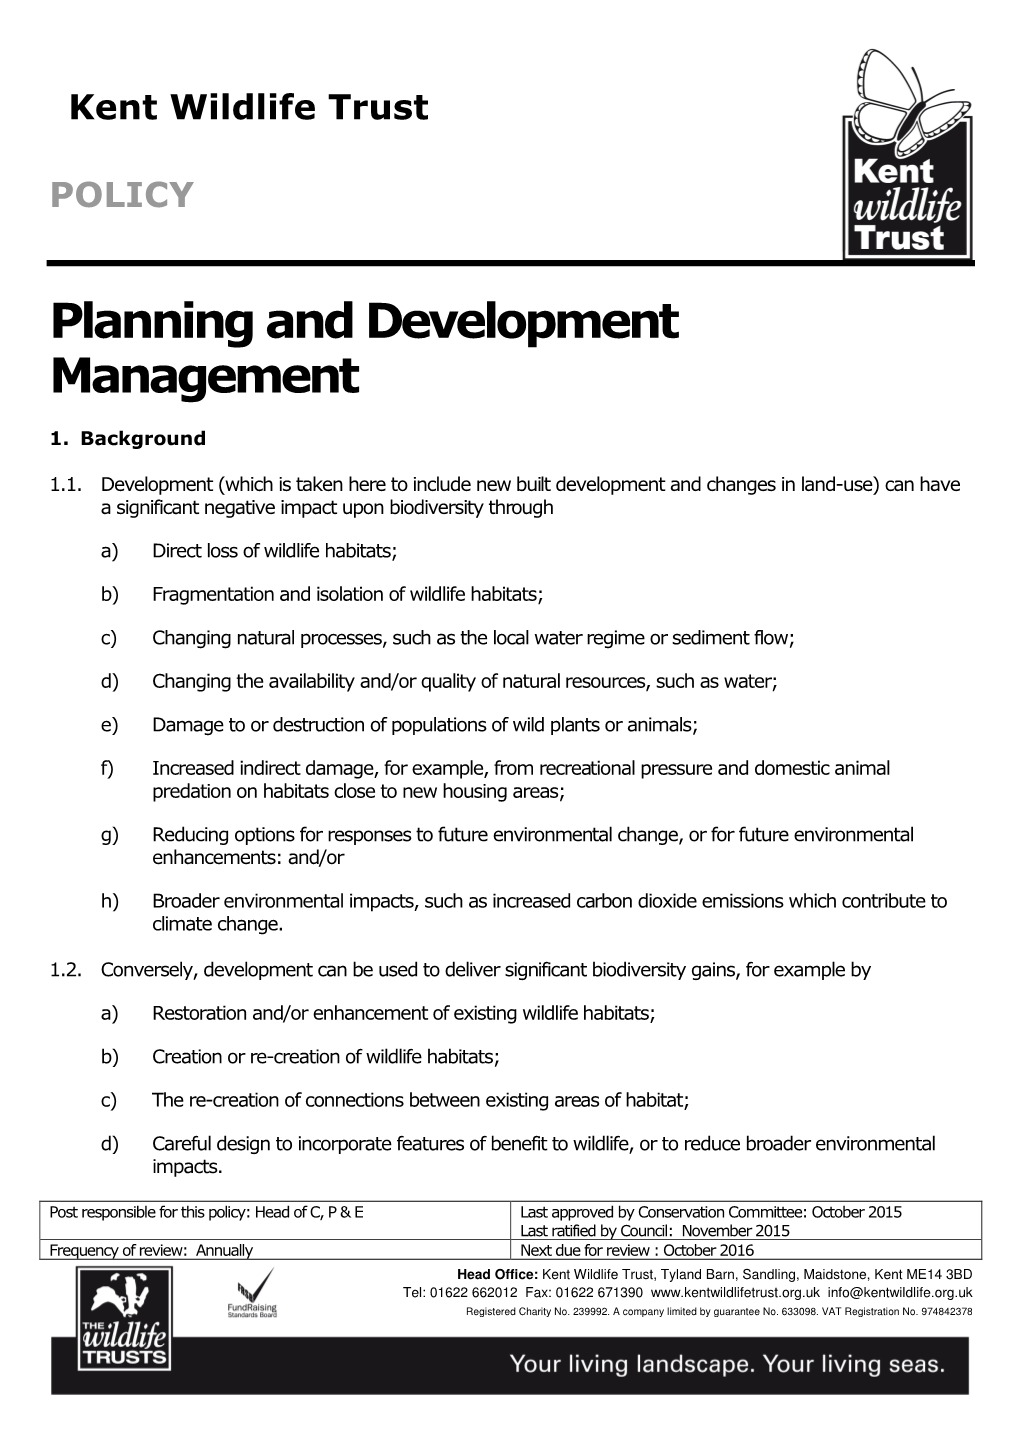 Planning and Development Management